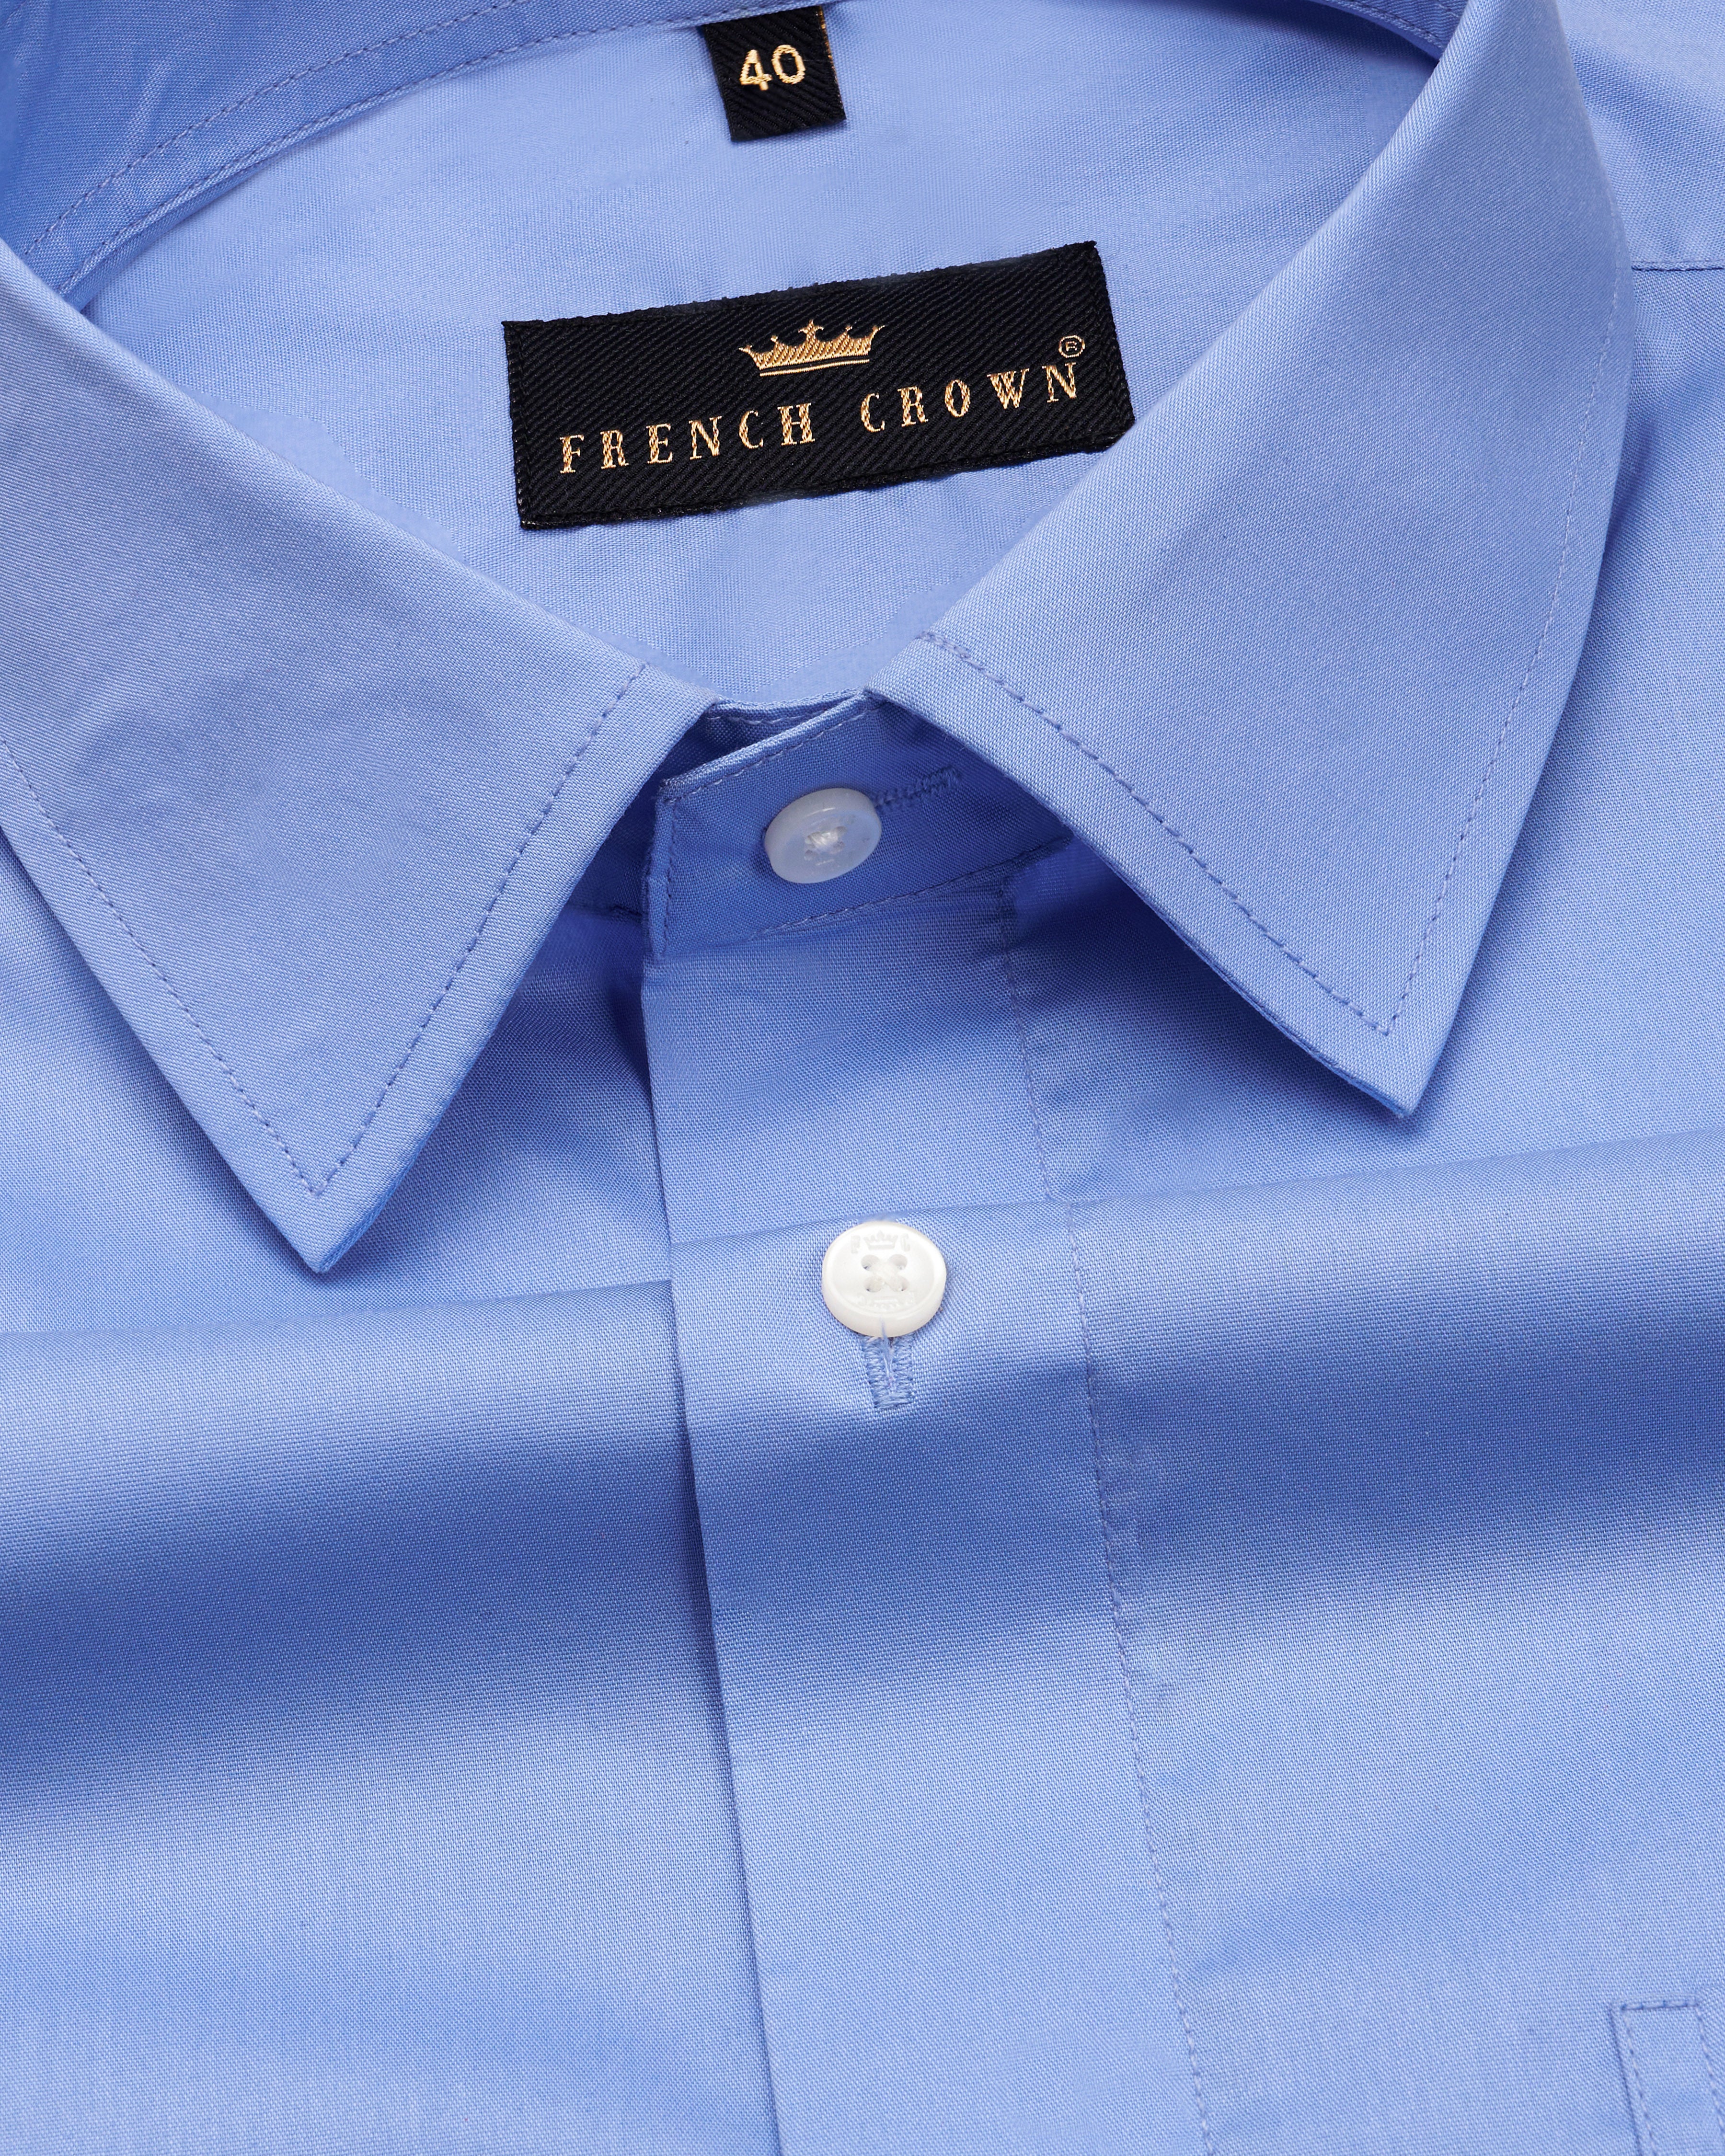 Tealish Blue Premium Cotton Shirt